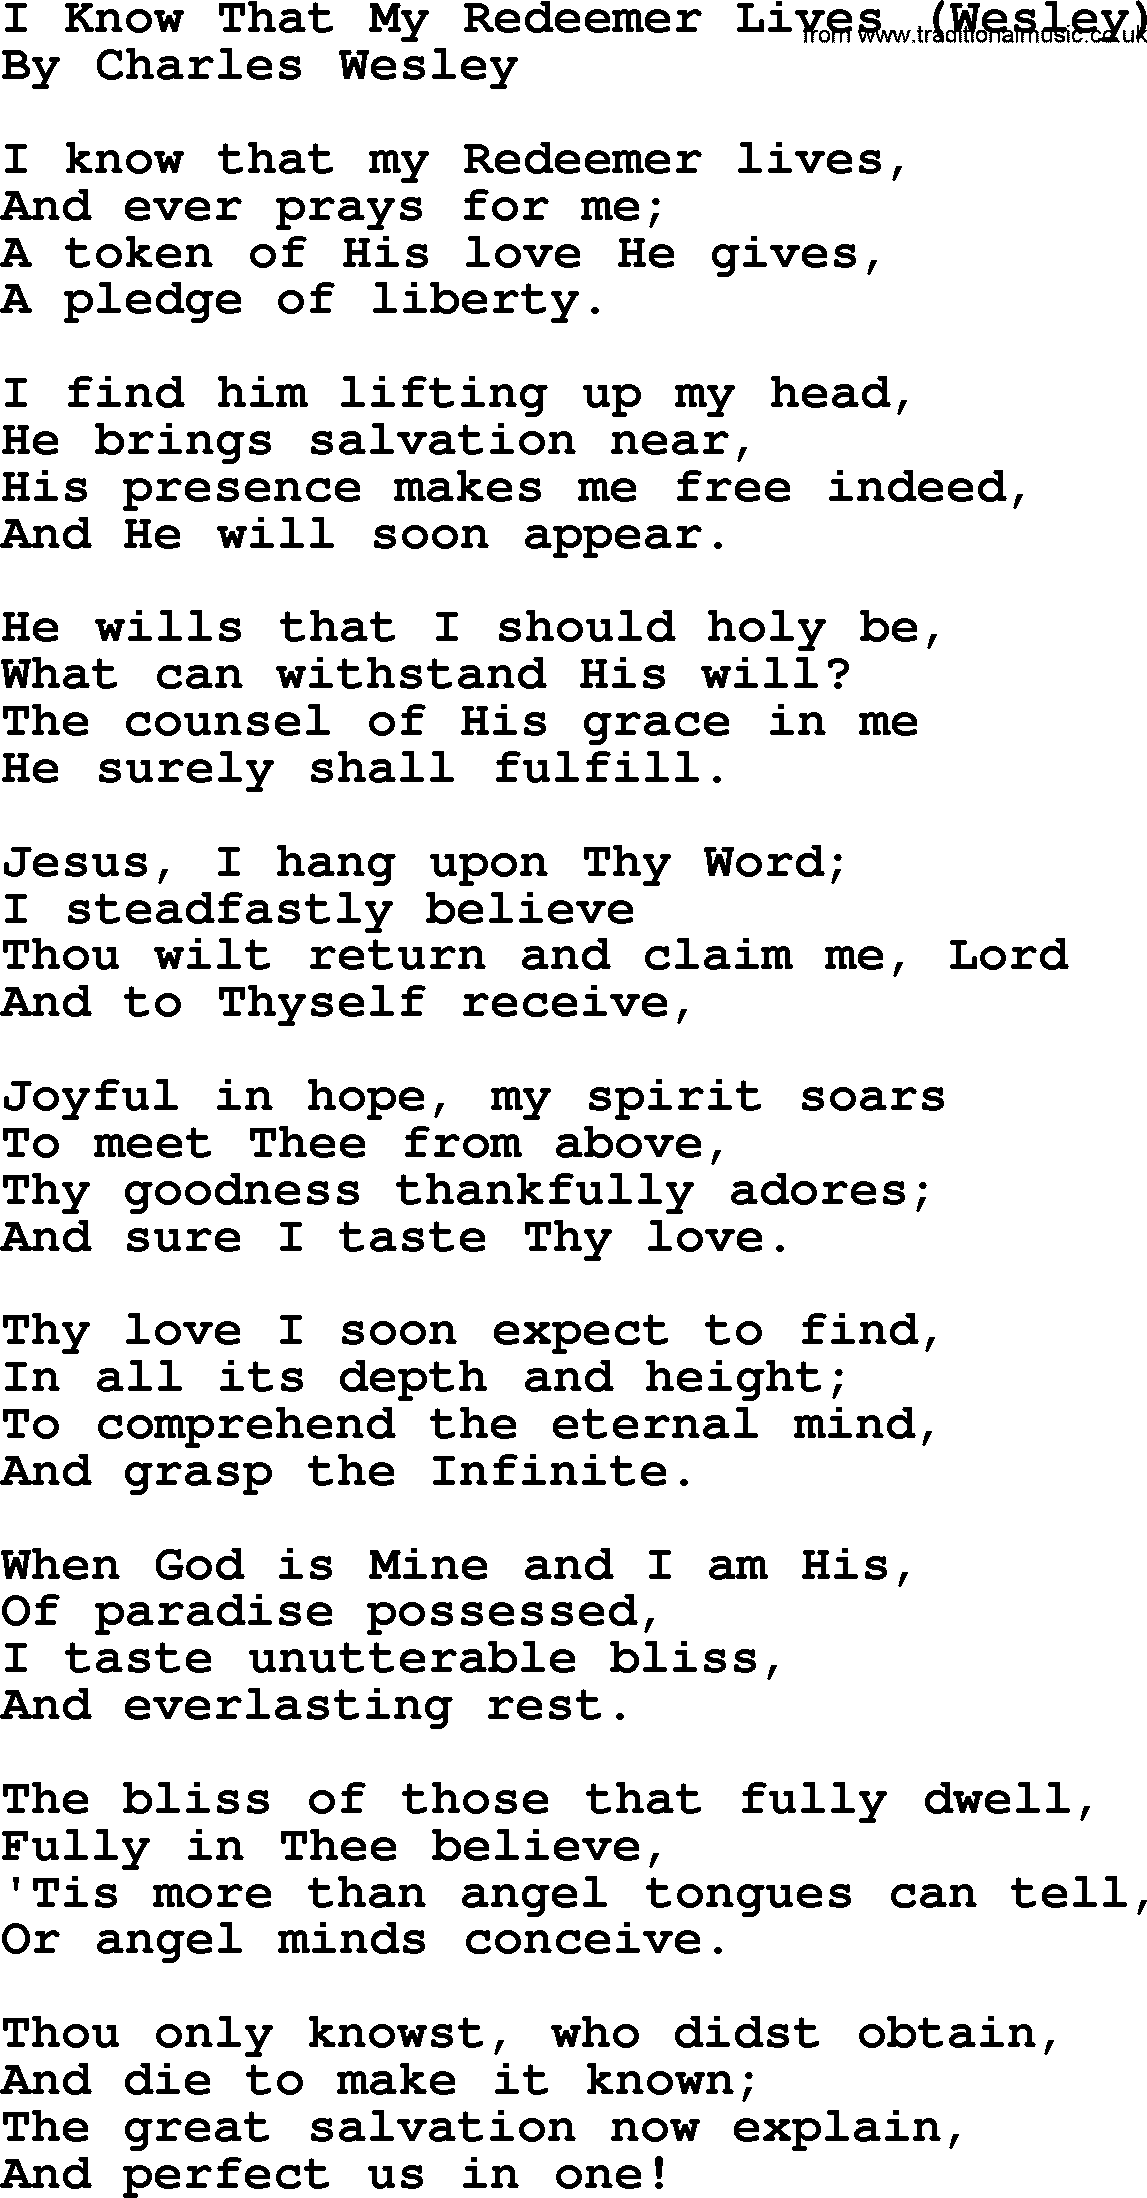 Charles Wesley hymn: I Know That My Redeemer Lives (Wesley), lyrics